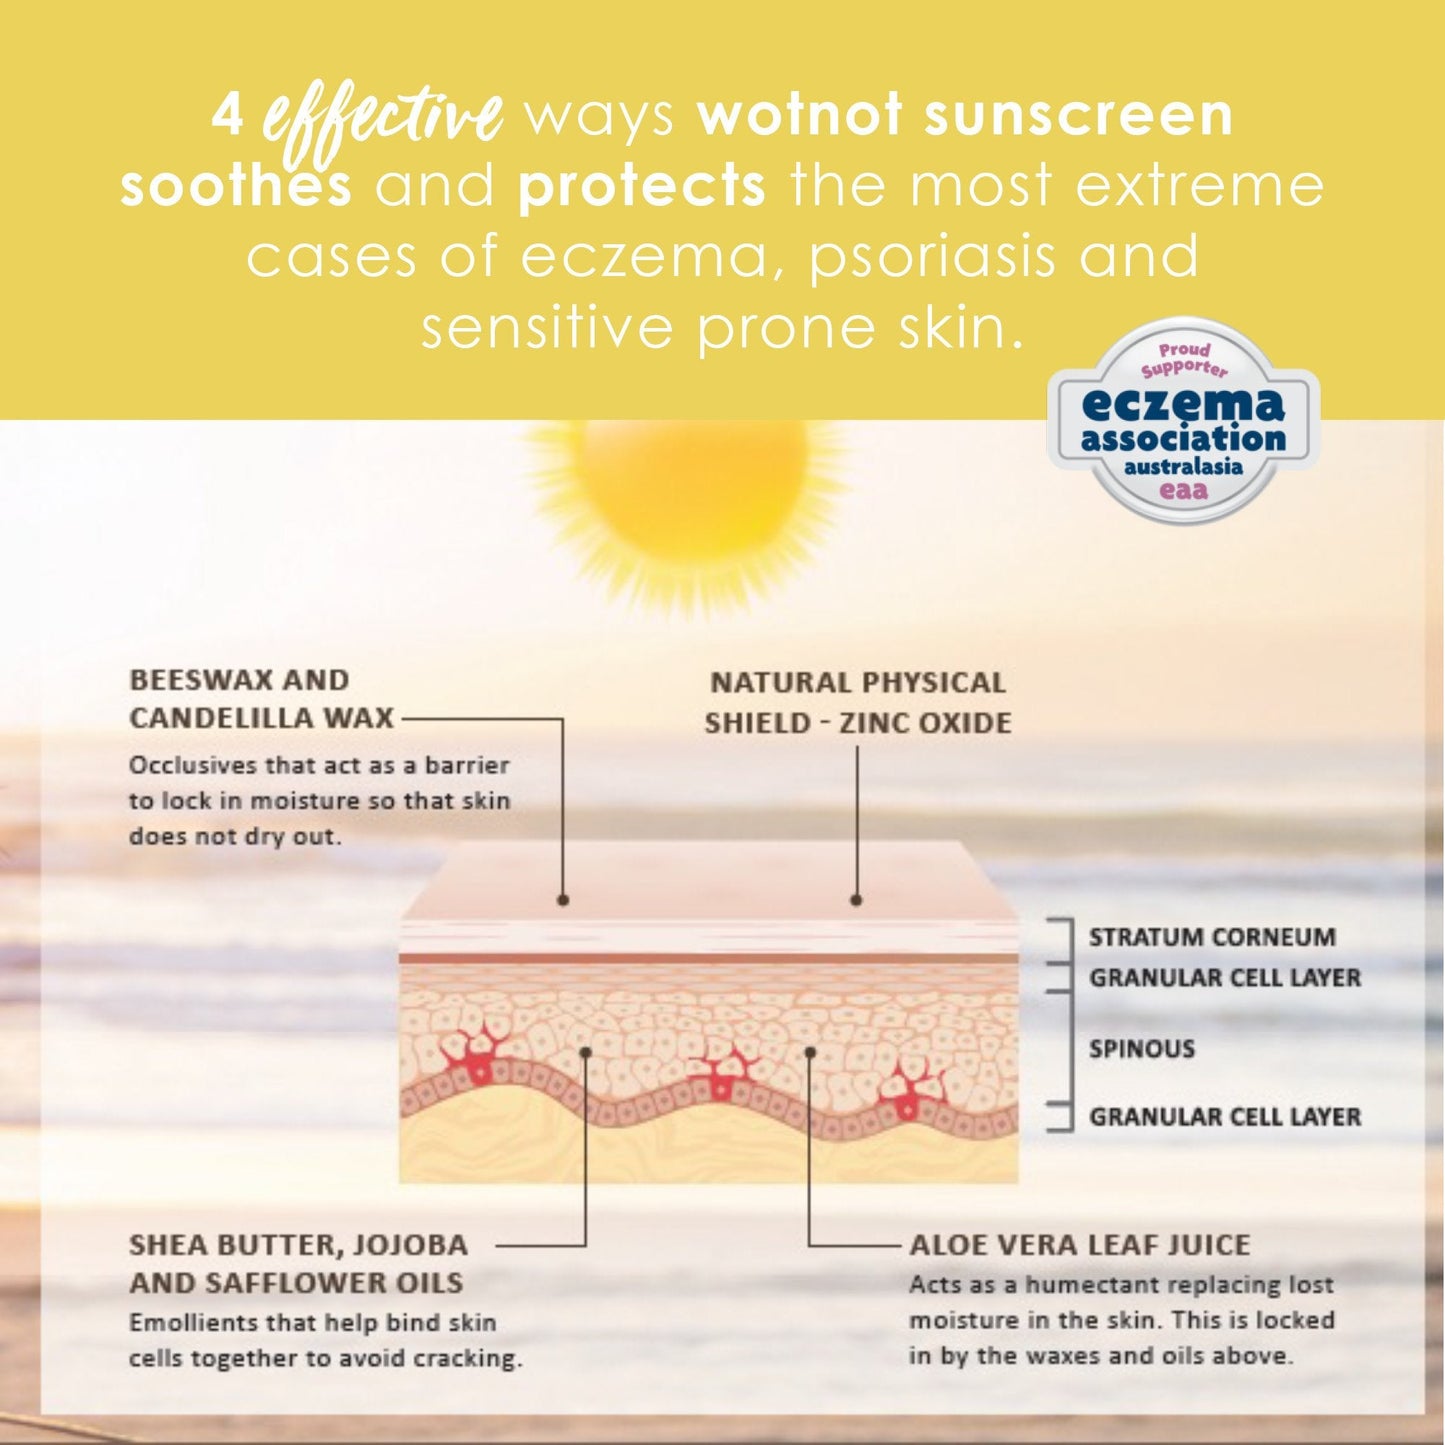 Wotnot Naturals 30 SPF Natural Sunscreen 150g, Suitable For Sensitive Skin